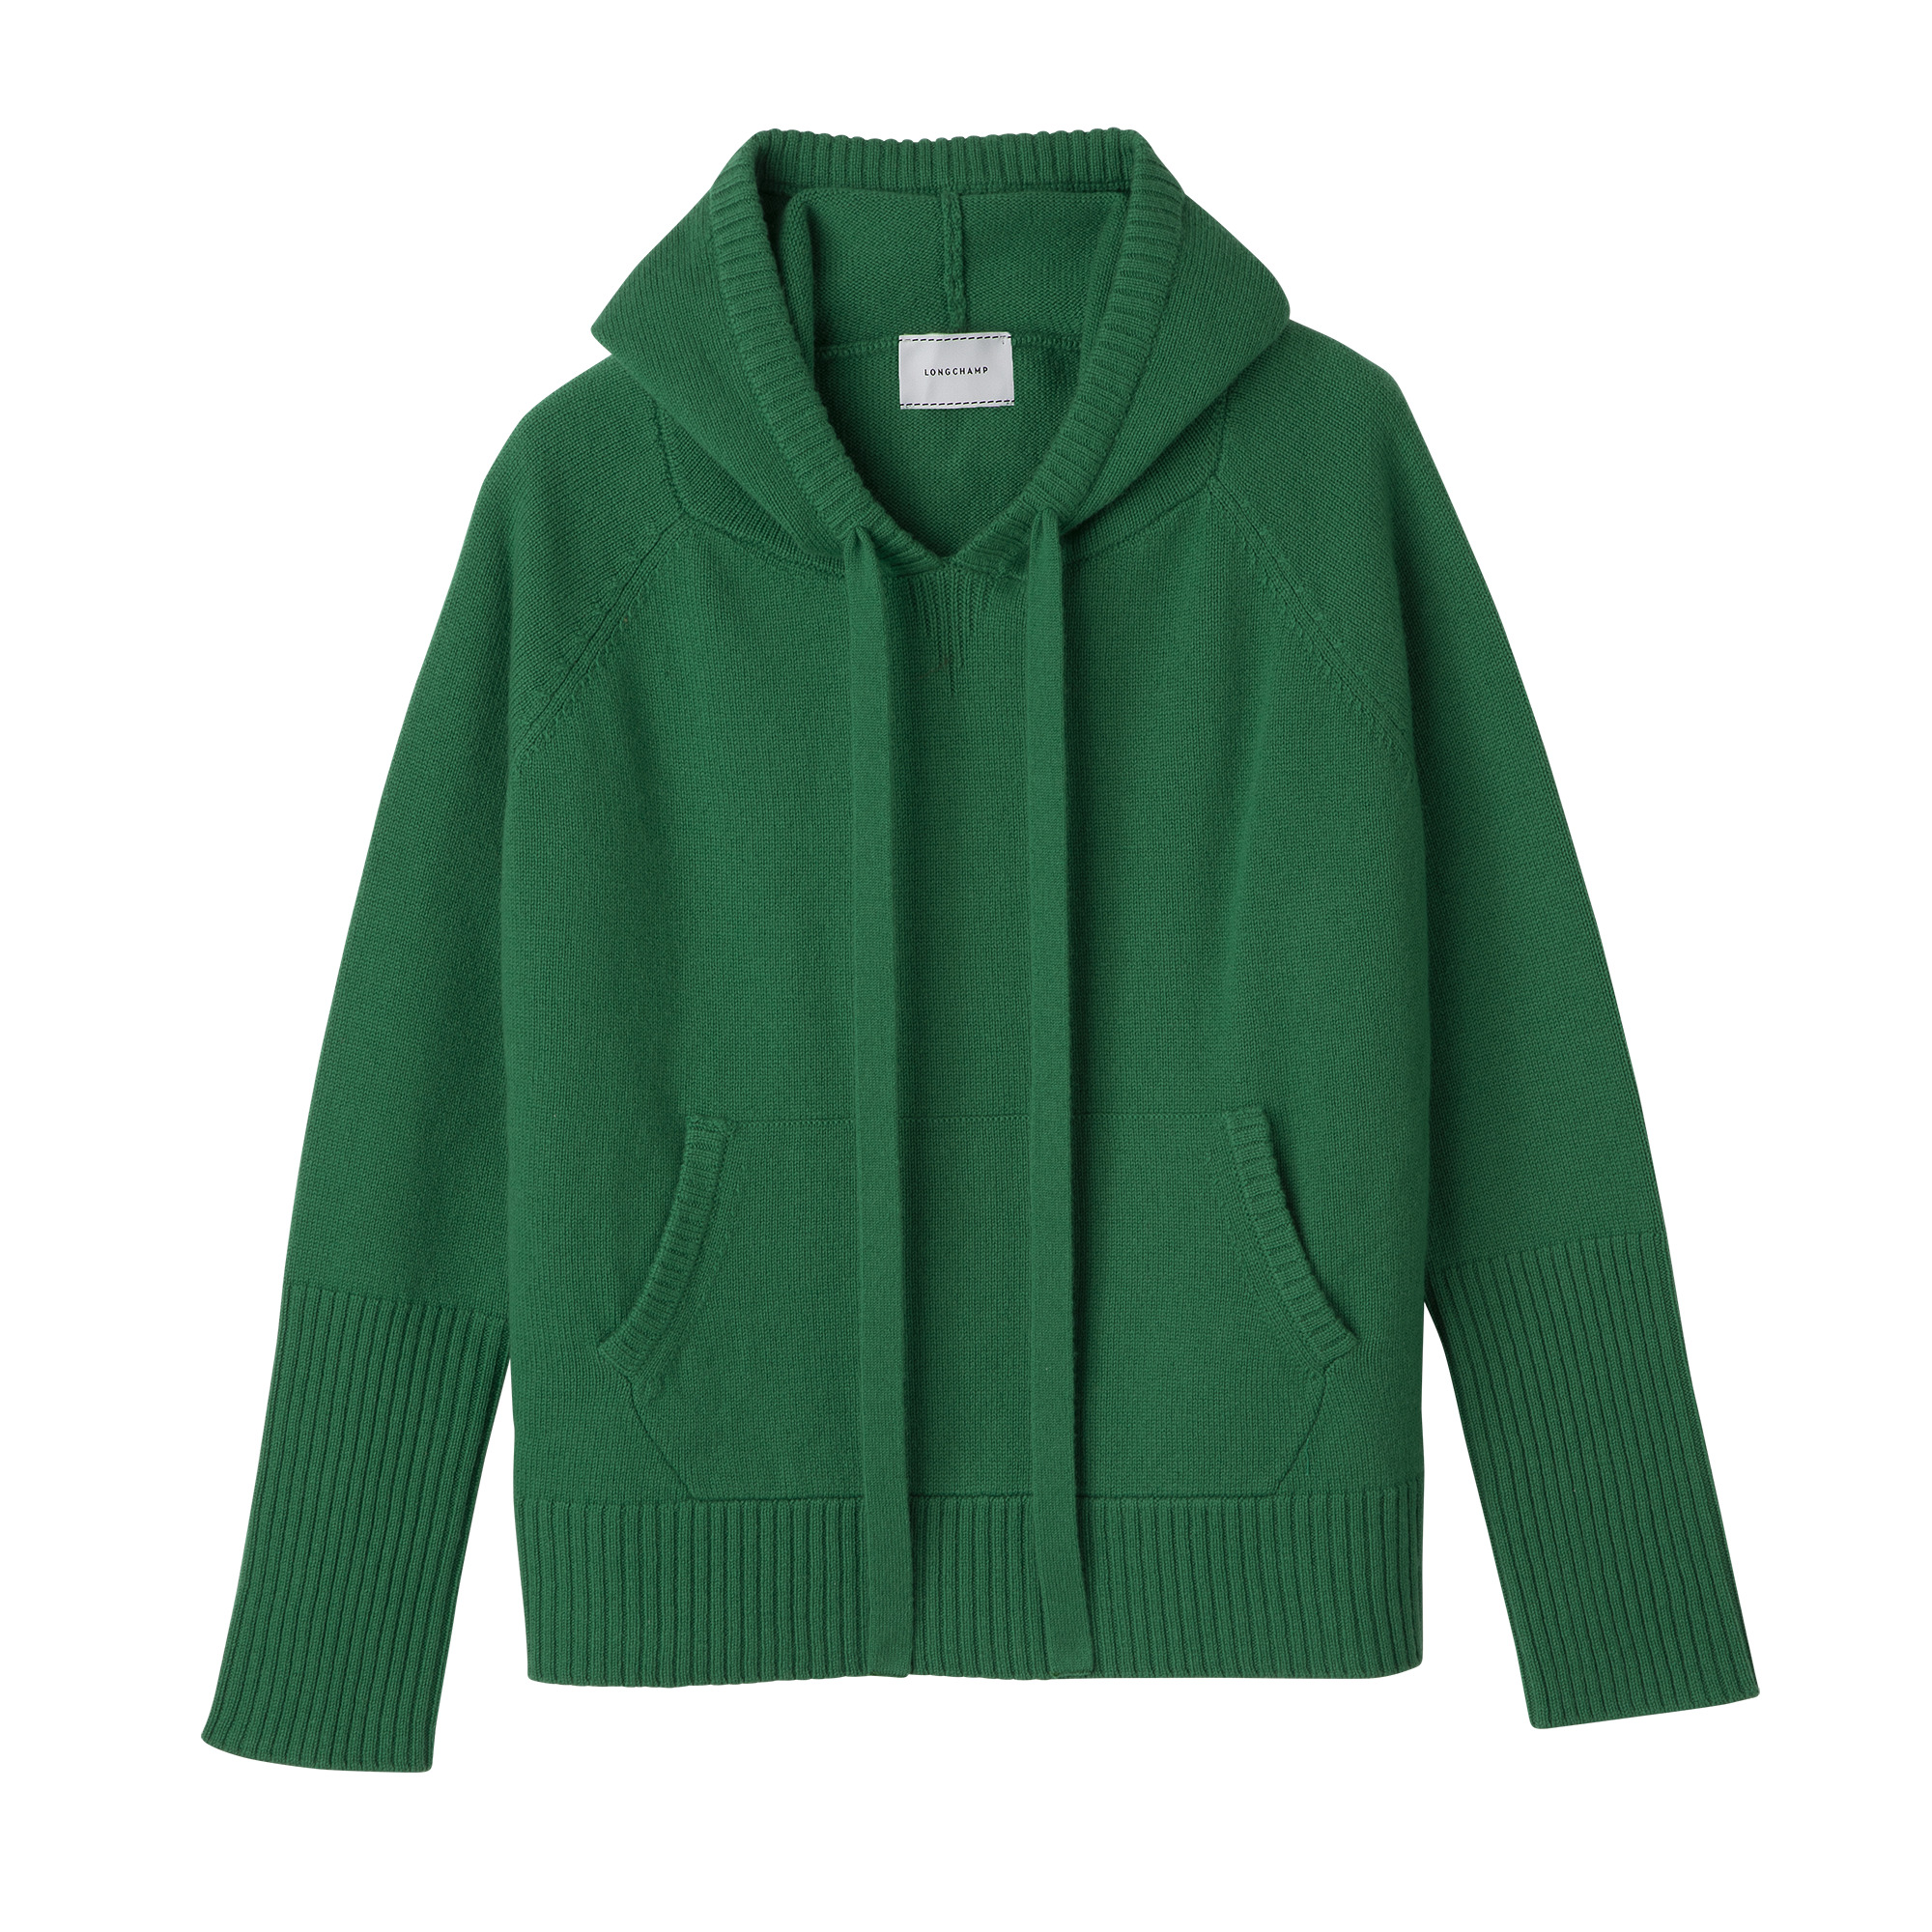 Hoodie jumper Green - Knit - 1